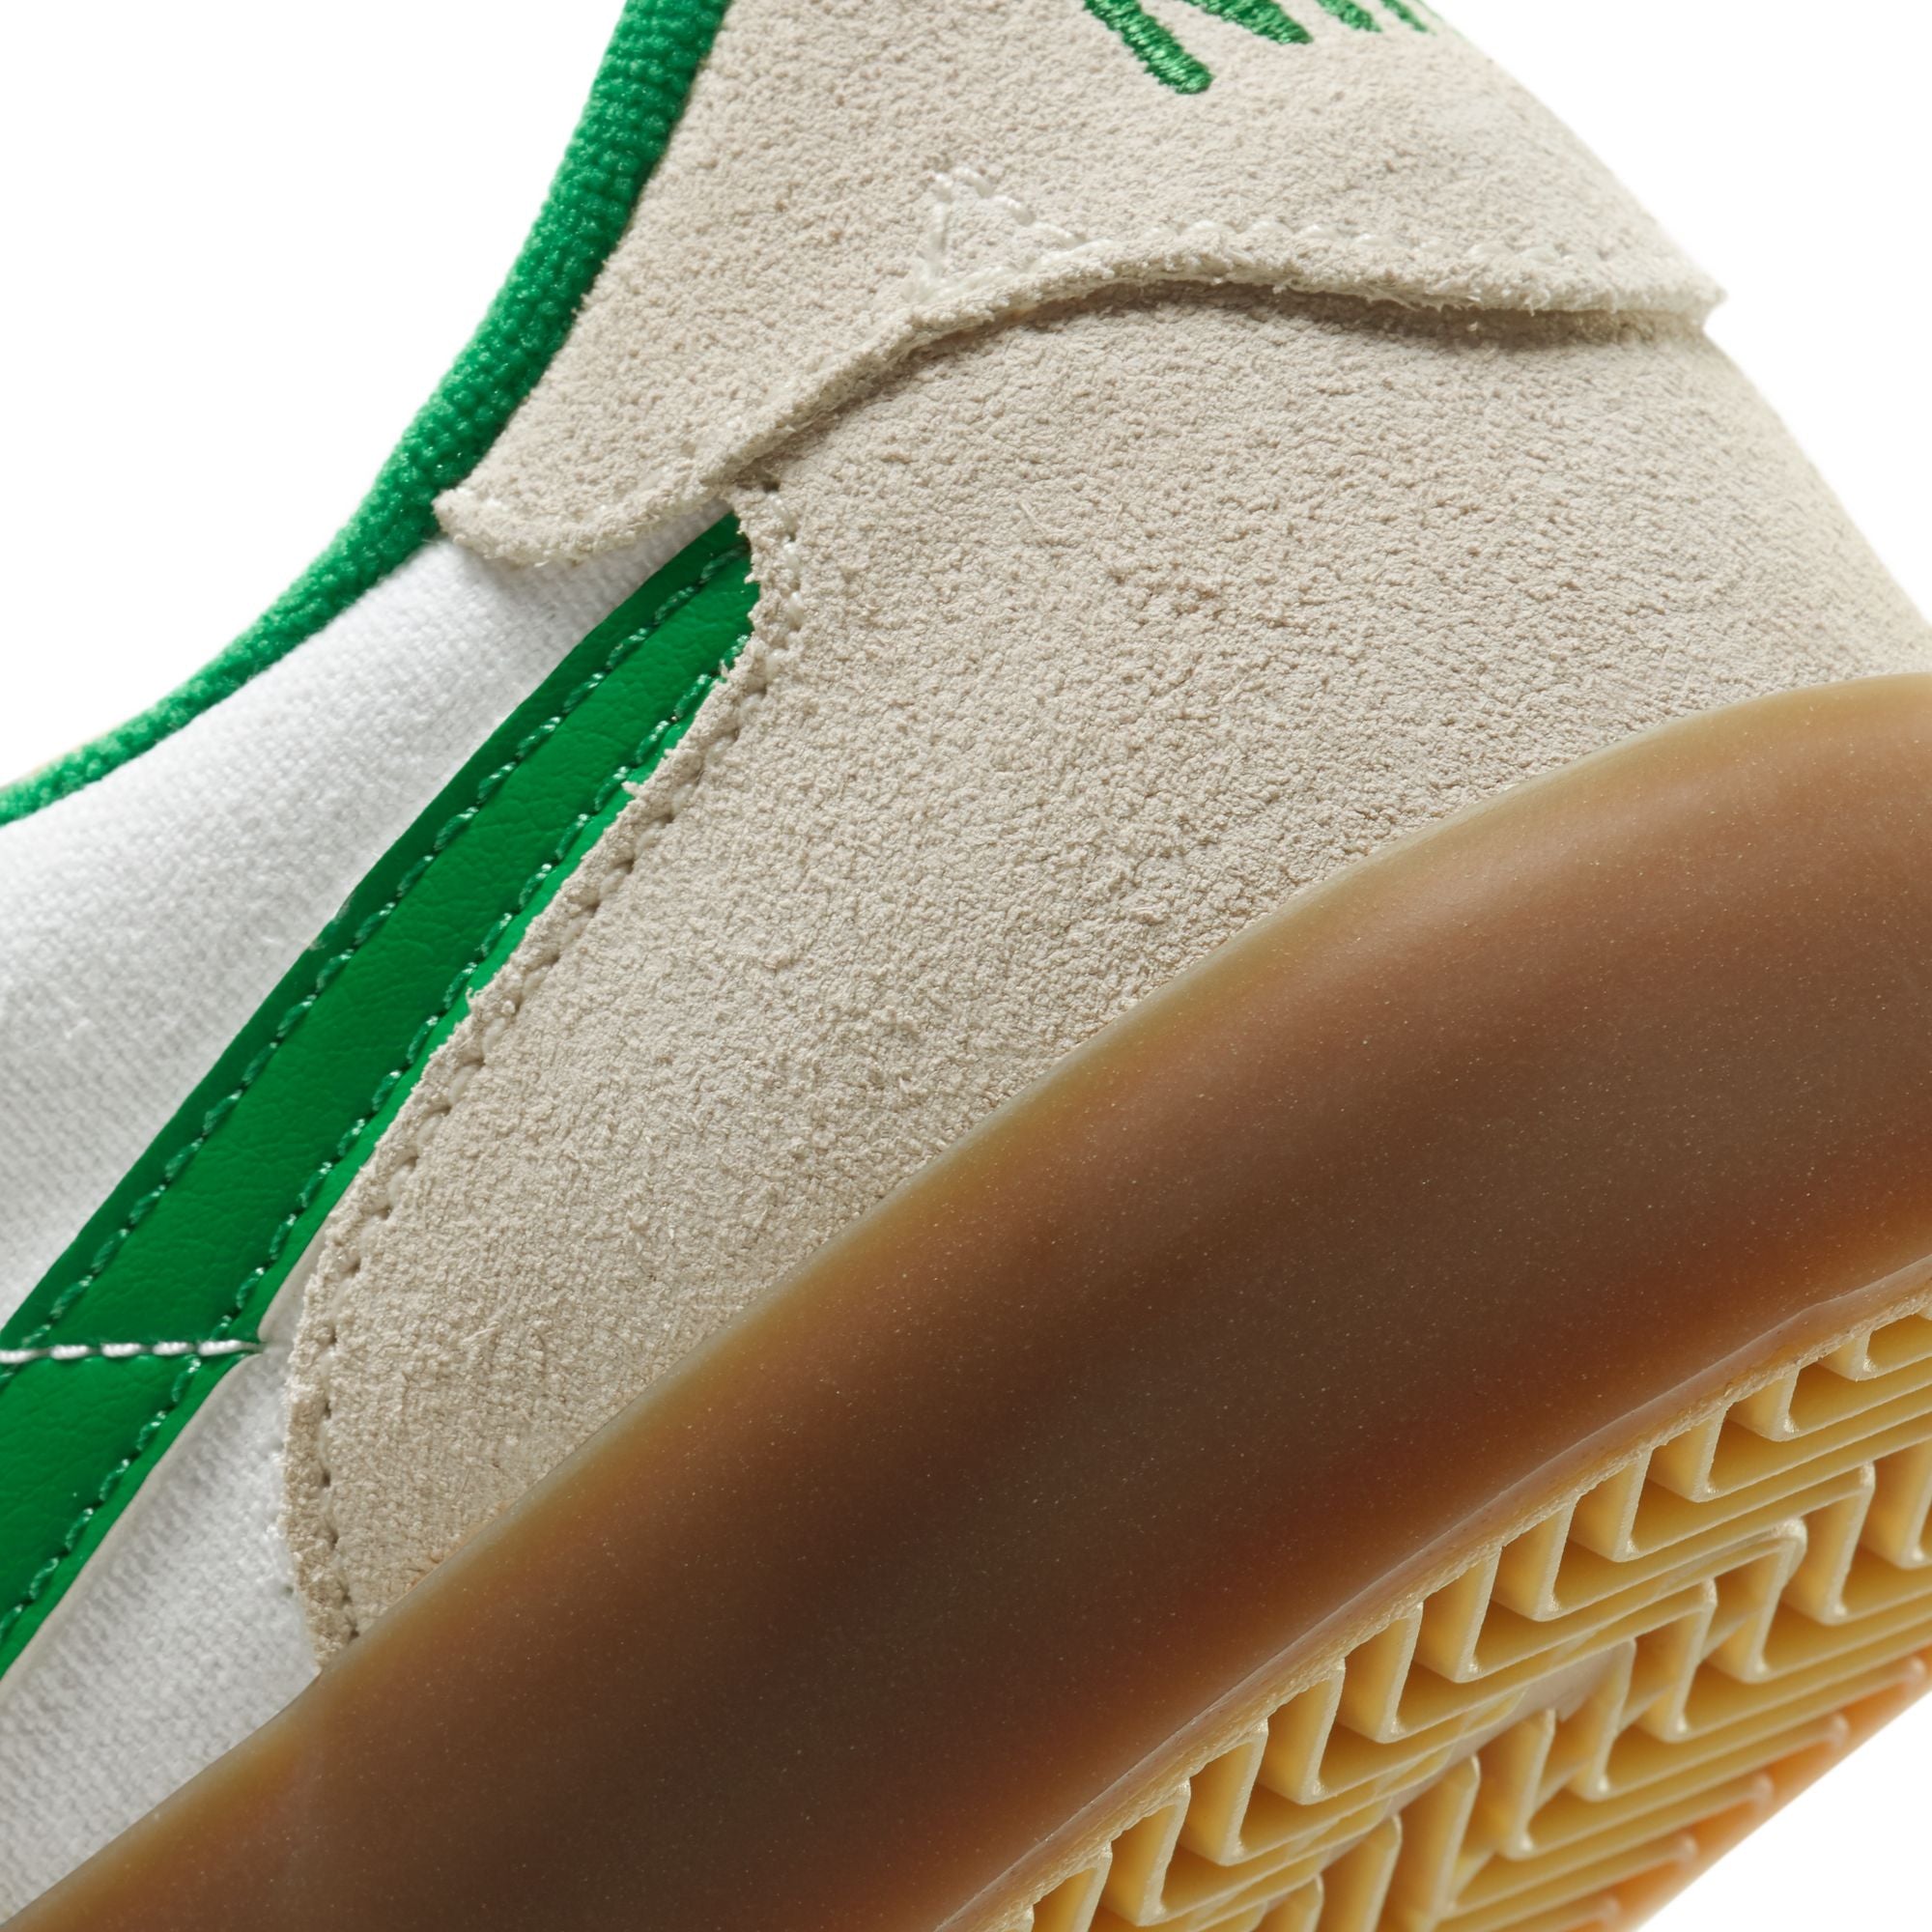 Nike SB Heritage Vulc Shoes - Summit White/Lucky Green-White